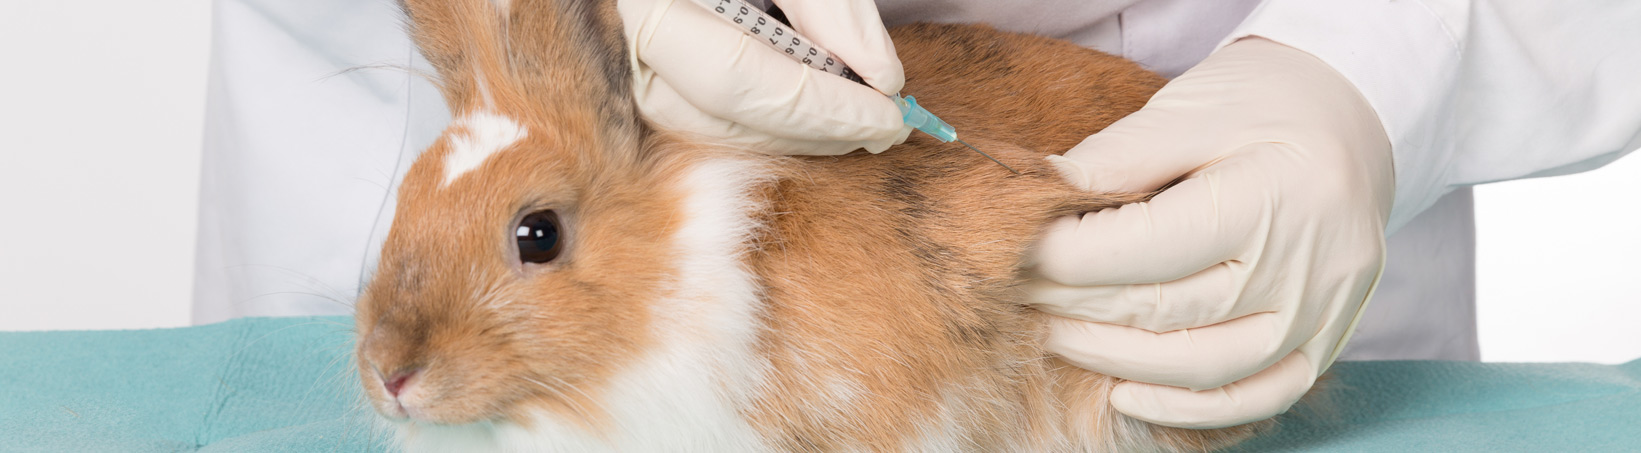 Pourquoi faire vacciner son animal domestique